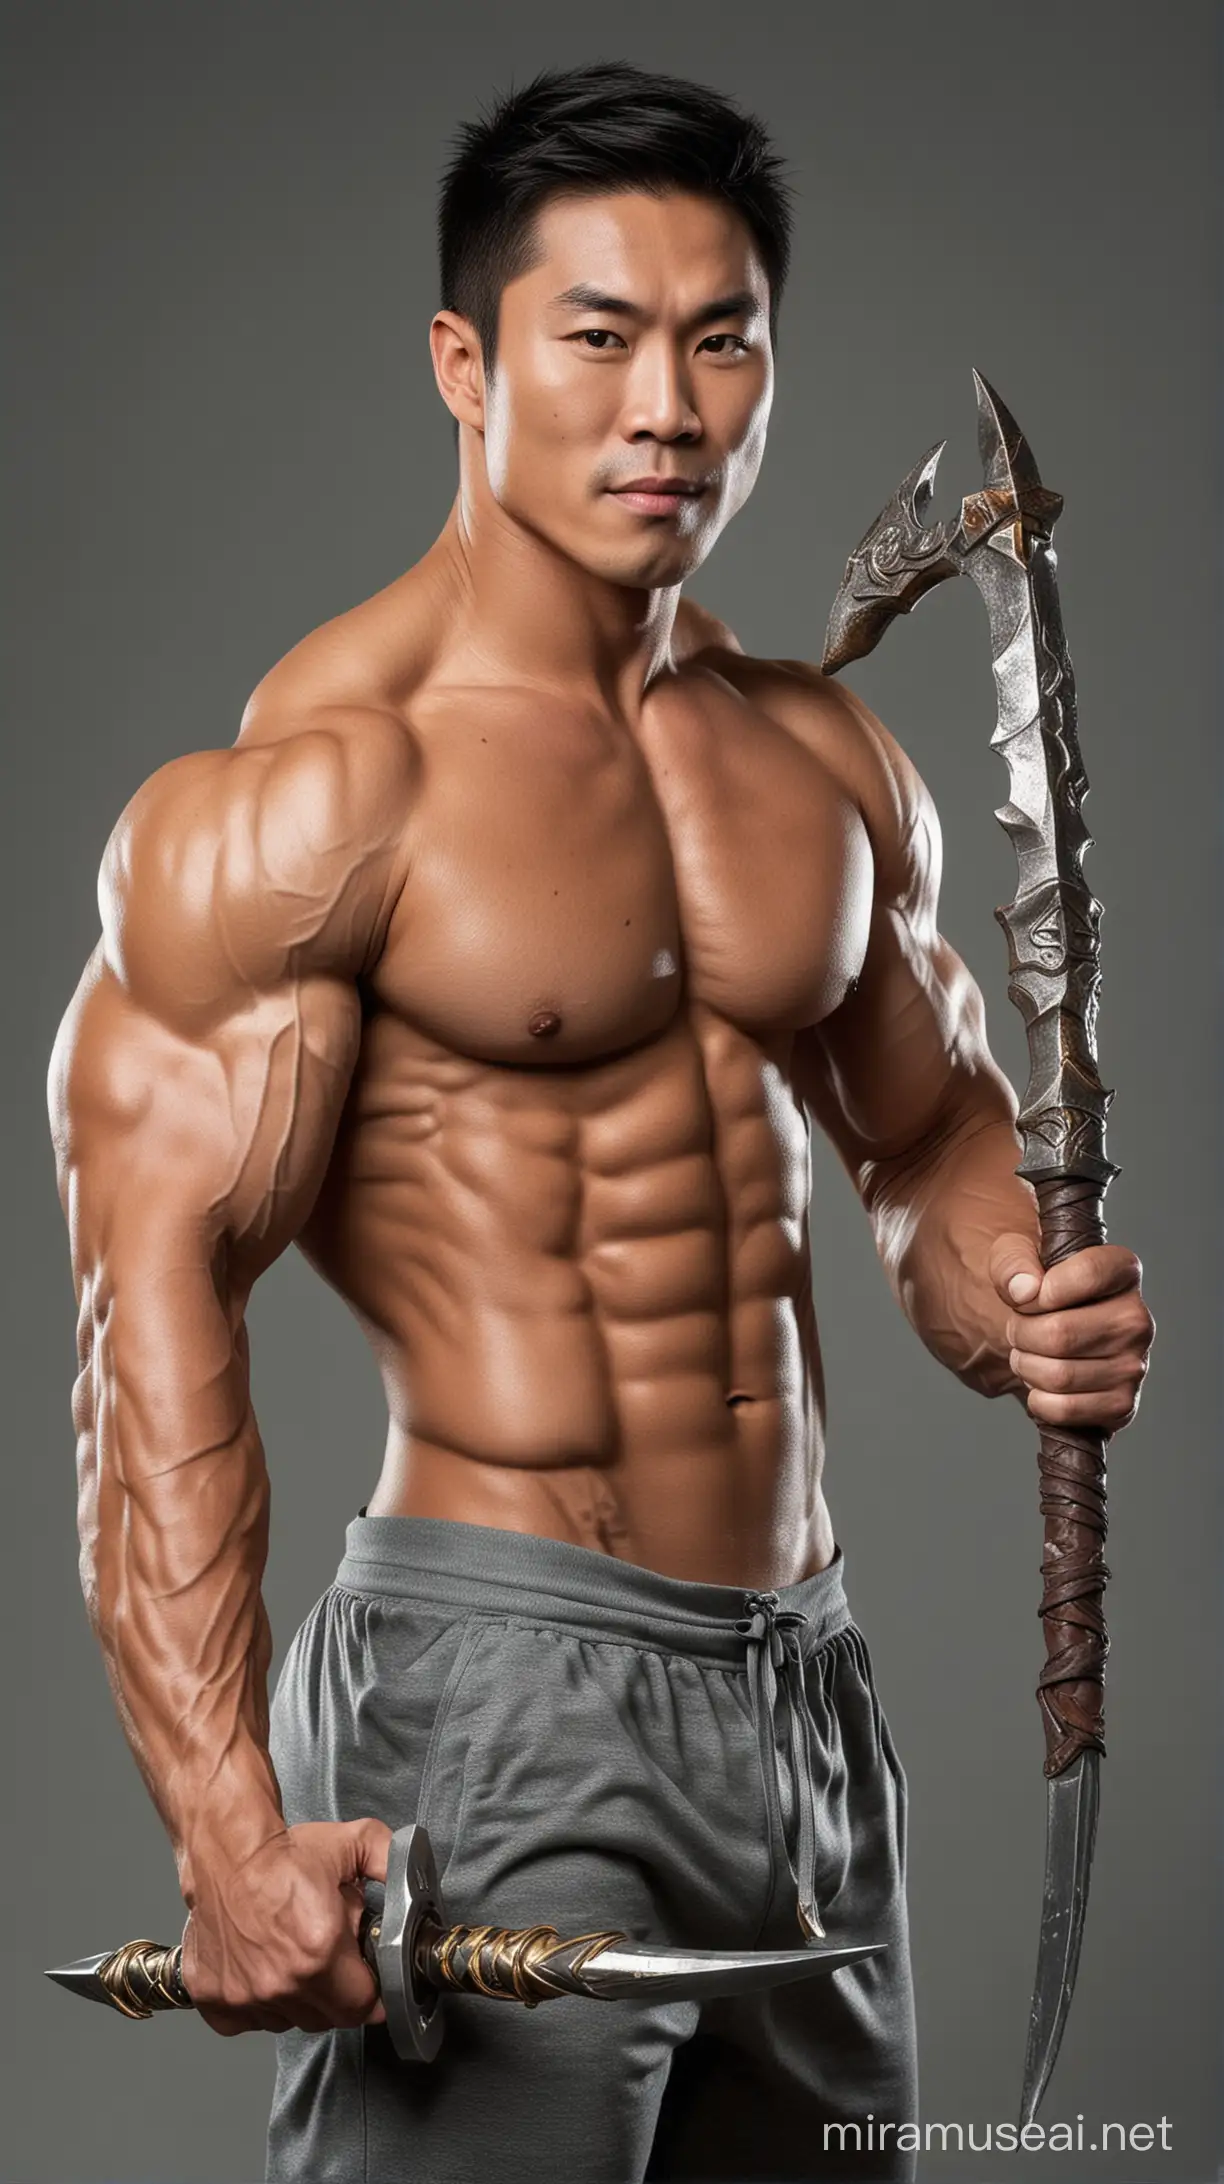 Muscular Asian Bodybuilder Holding Trident in Arena